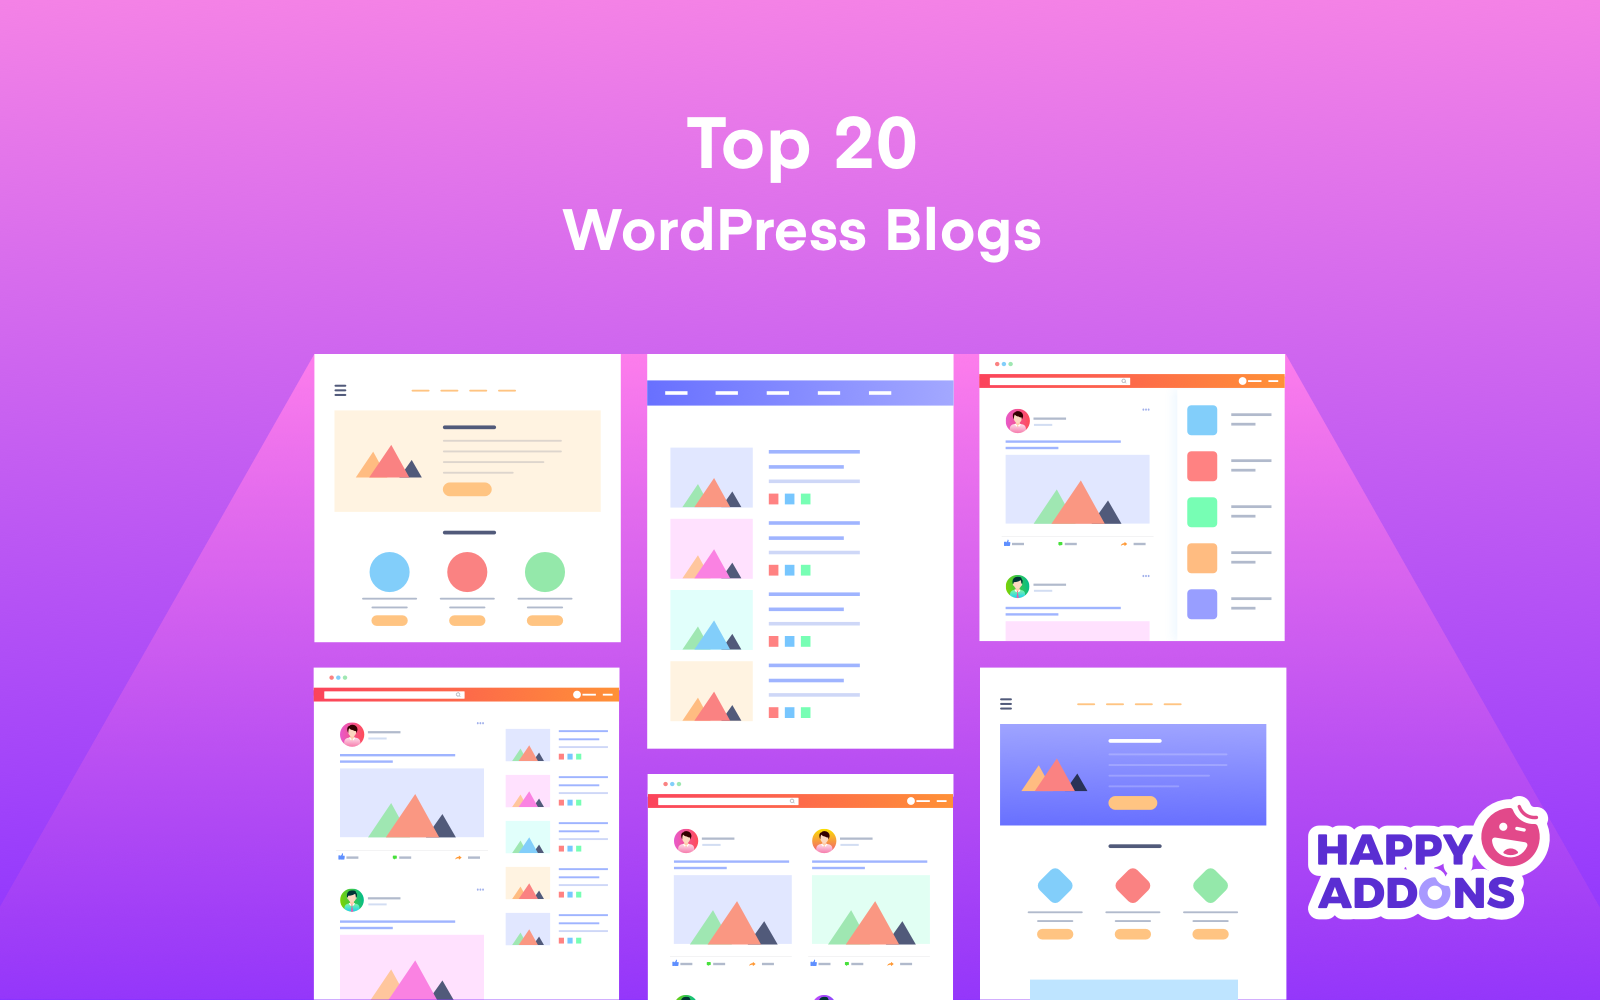 Top 20 WordPress Blogs